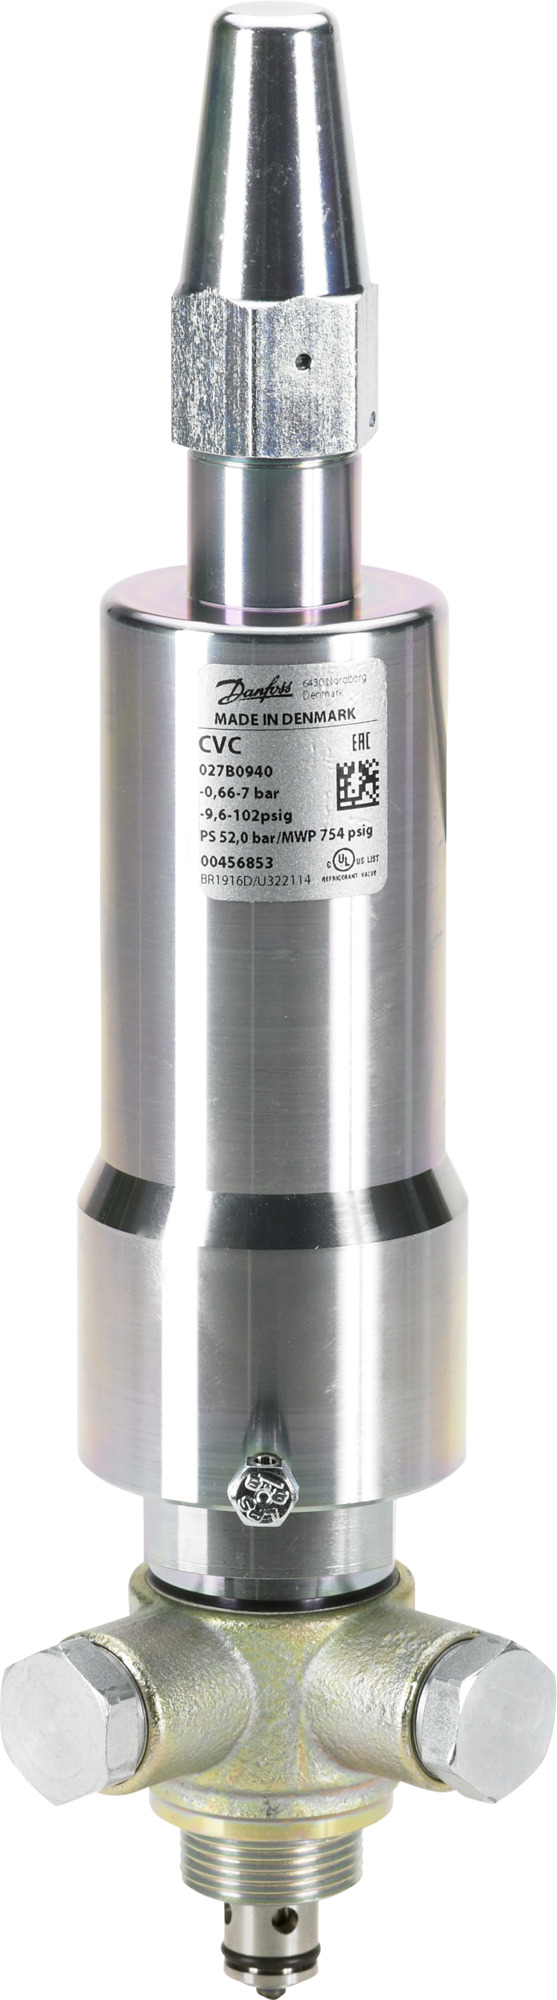 Pilot valve, CVC-L, Pressure-operated pilot valve